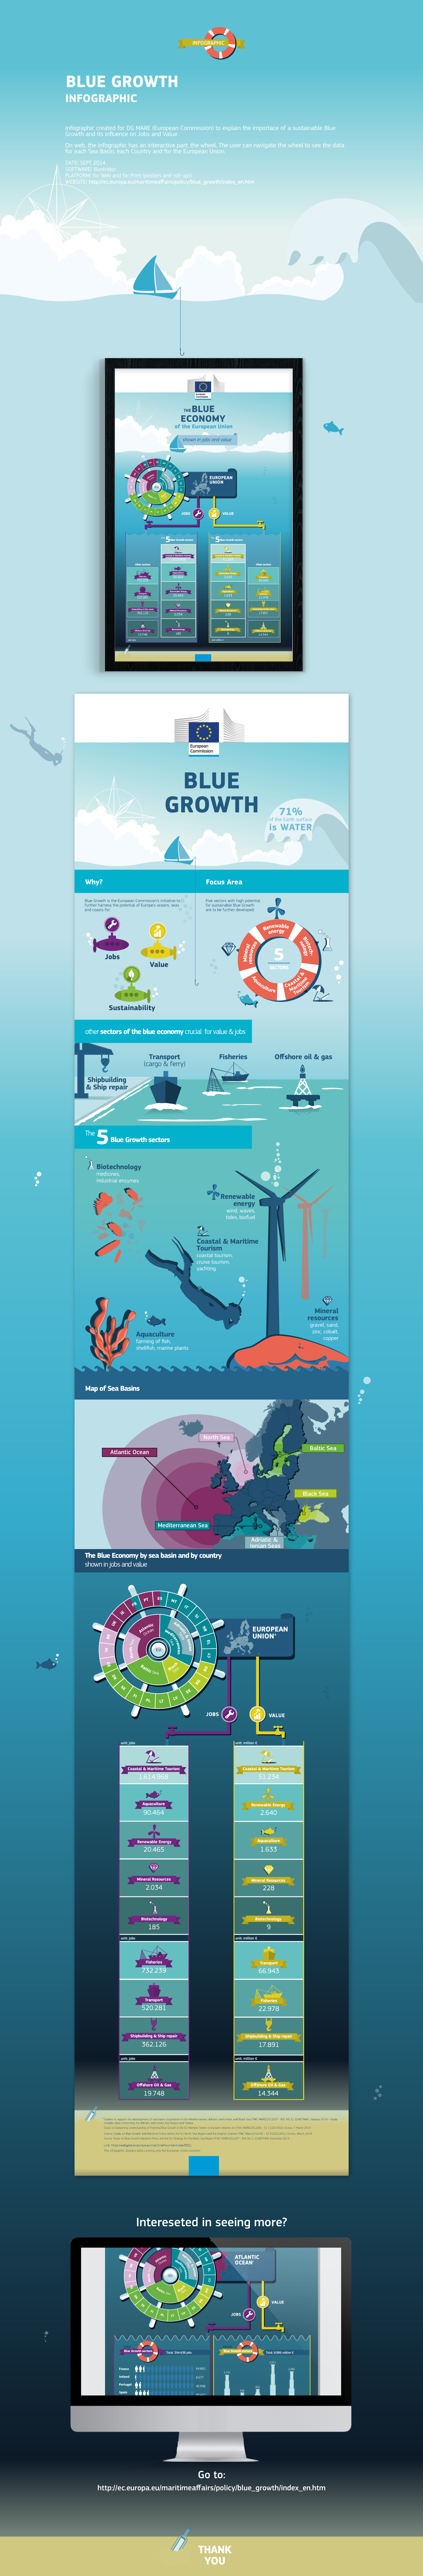 infographic blue growth dg mare European Union Jobs Renewable Energy ship building ship repair aquaculture biotechnology fisheries mineral resources coastal tourism maritime tourism Blue Economy